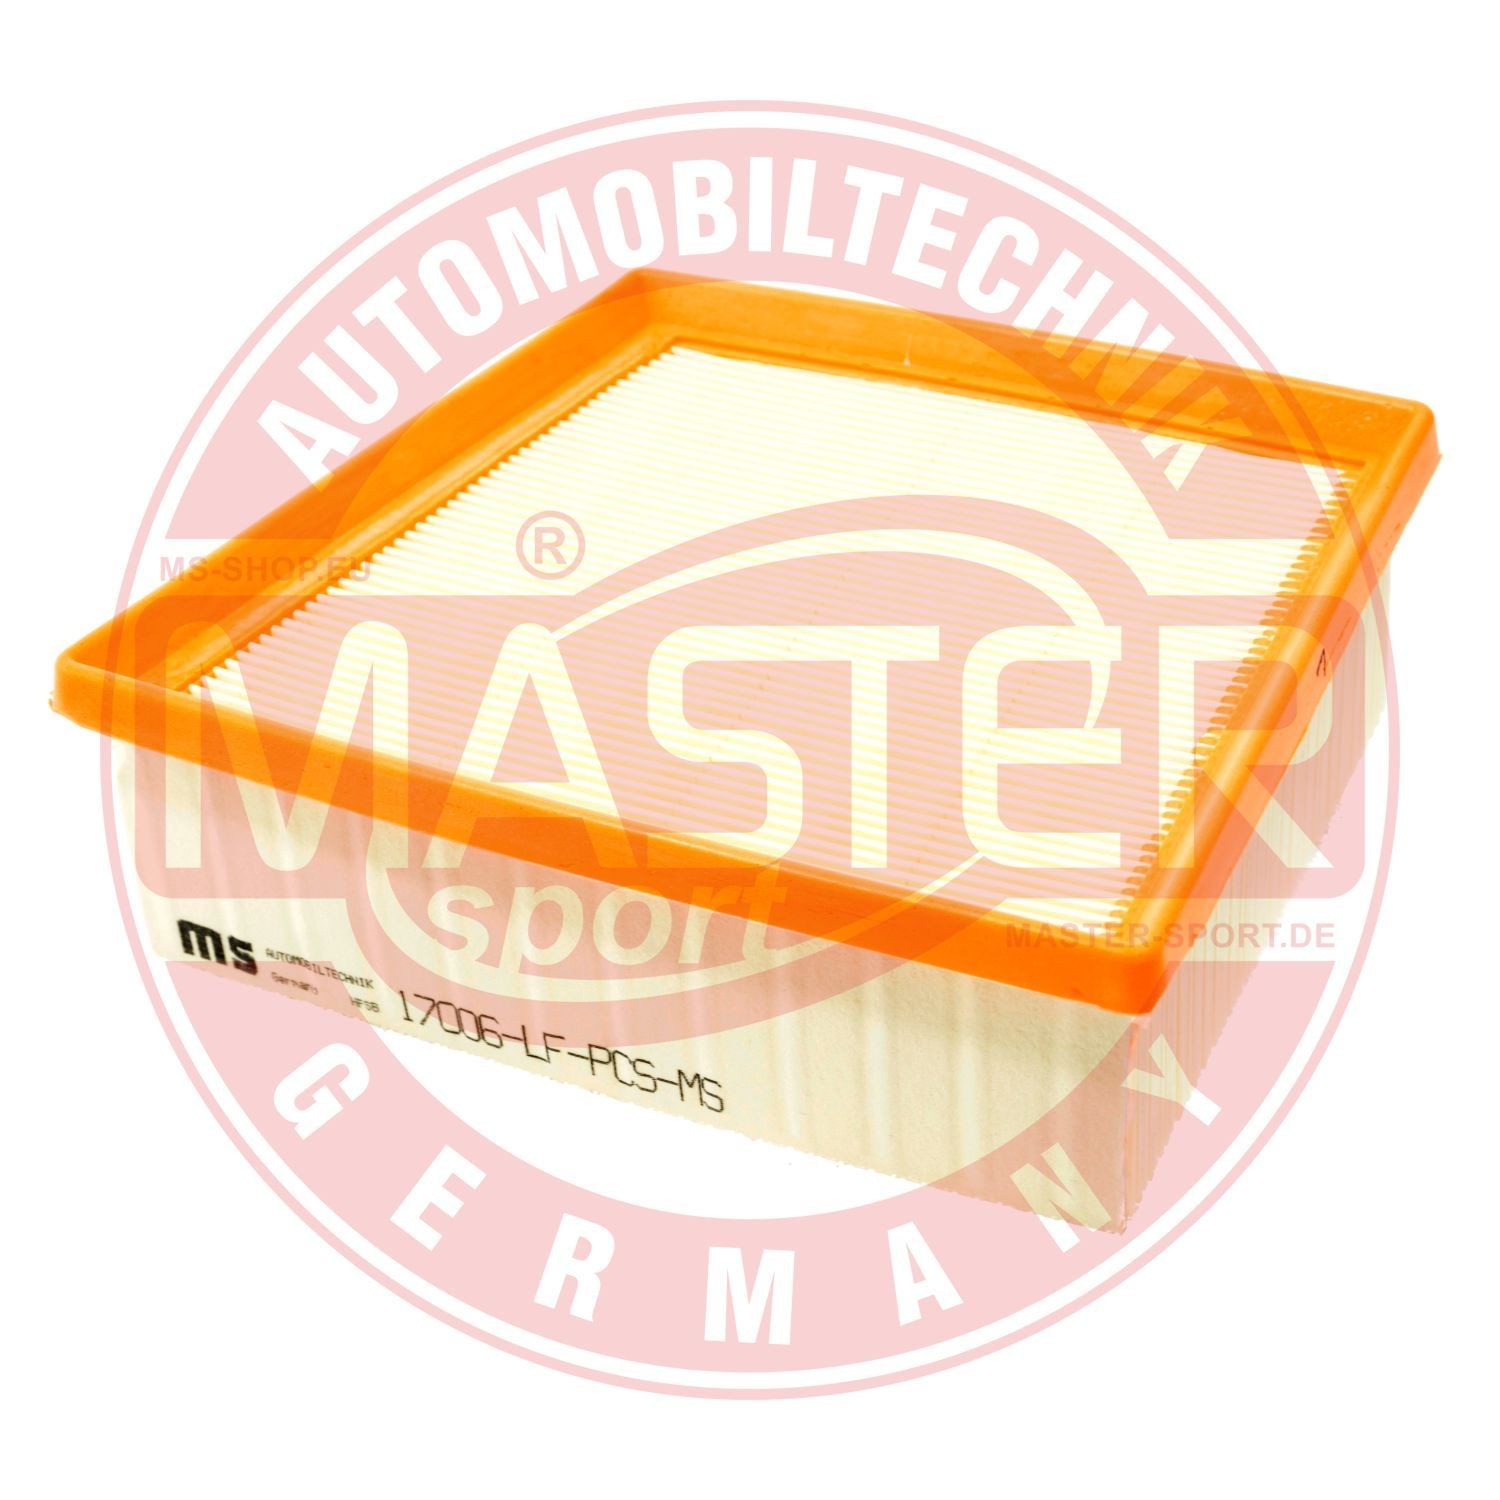 MASTER-SPORT Air filter 17006-LF-PCS-MS